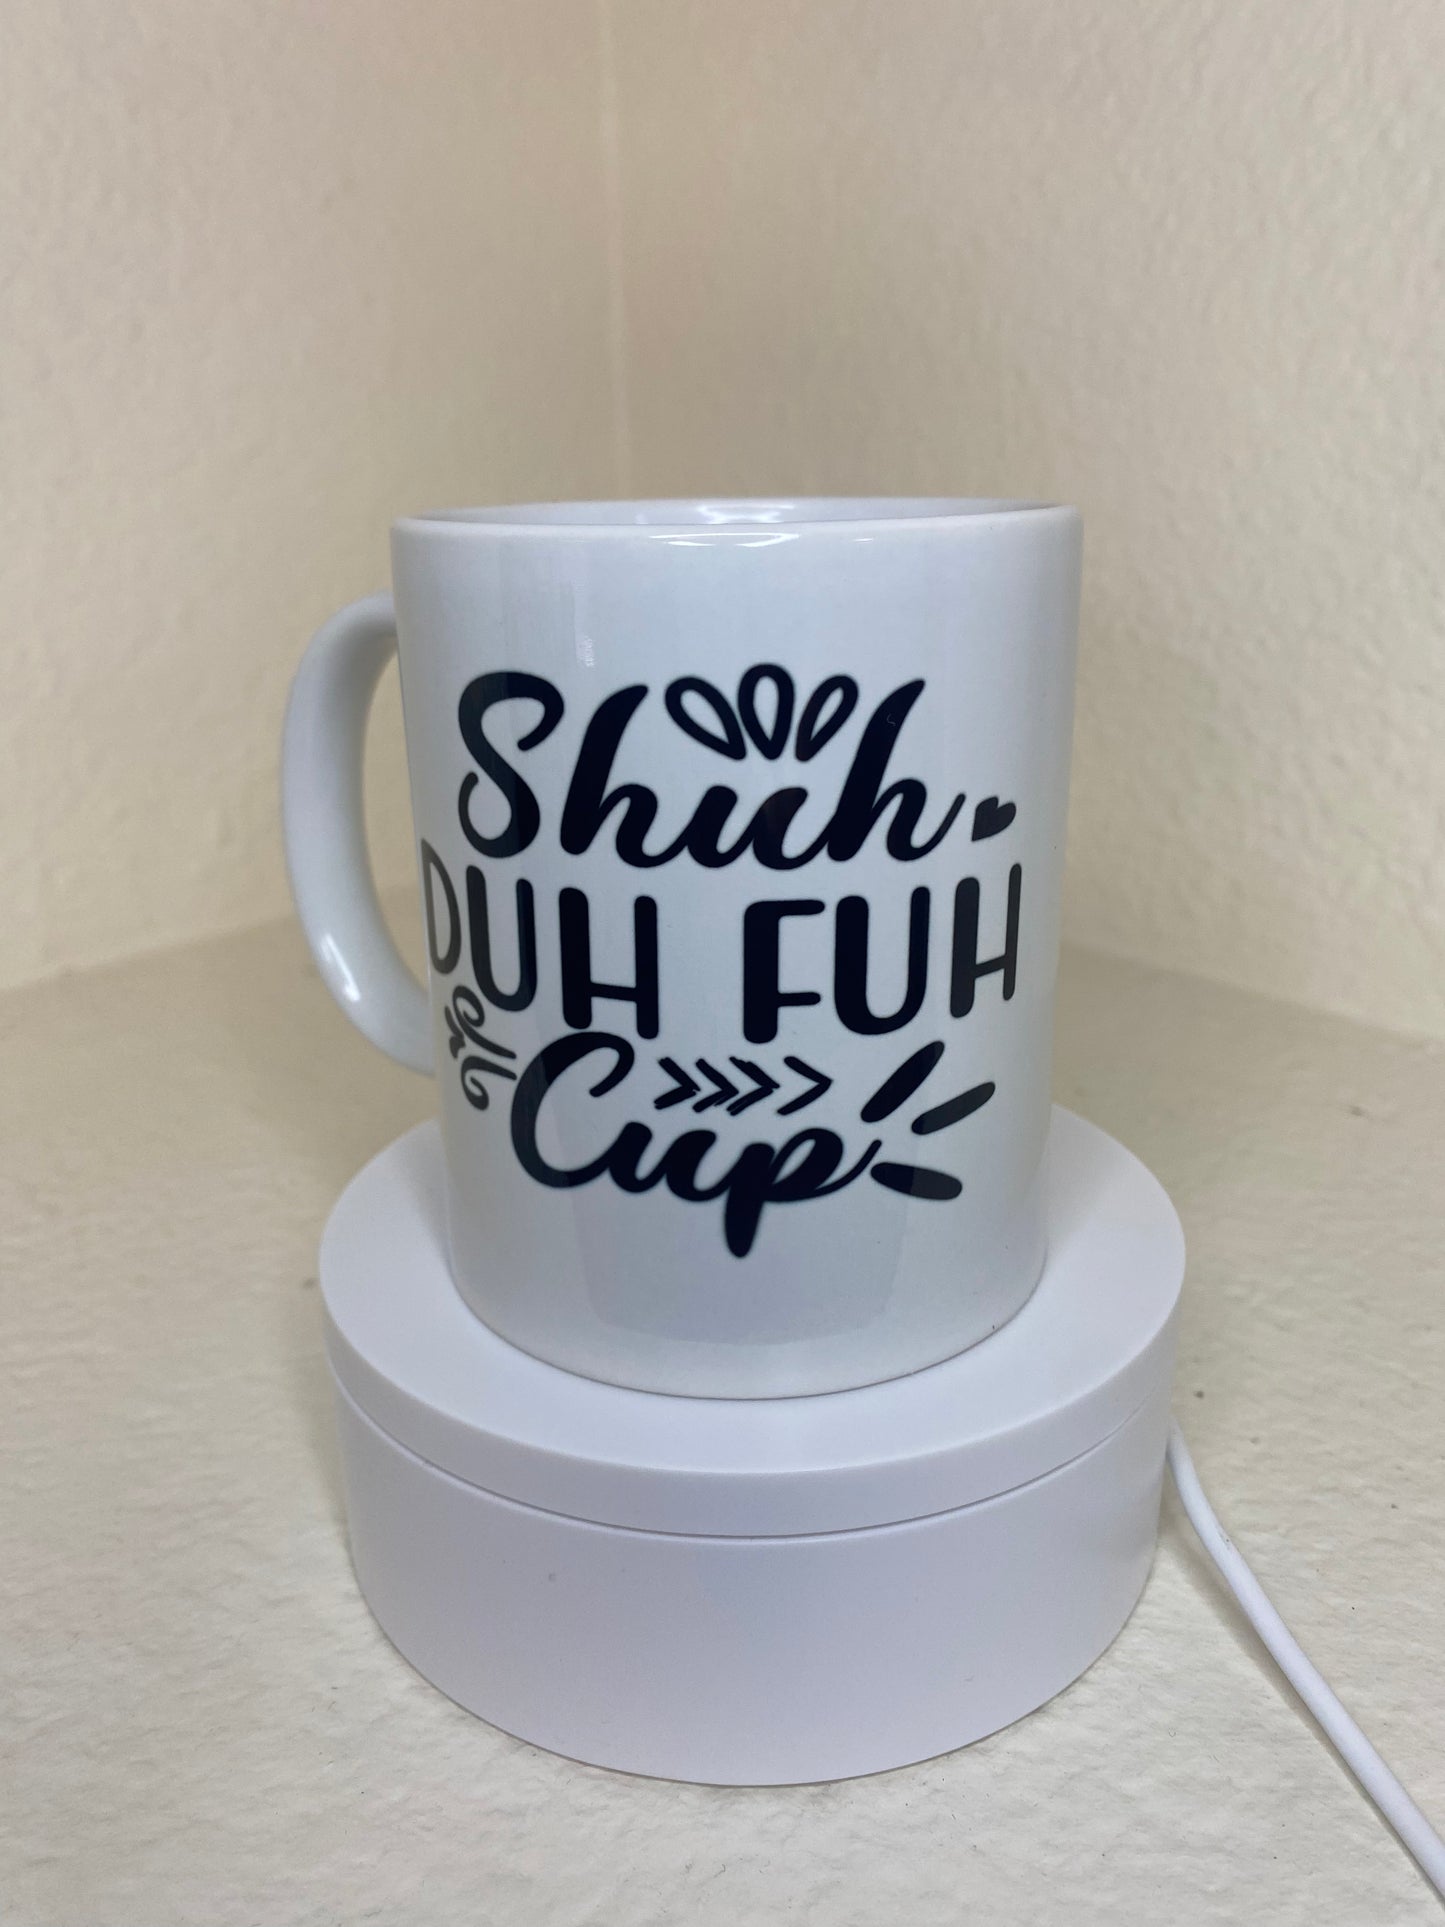 12 oz. "Shut Duh Fuh Cup" Sublimated Mug